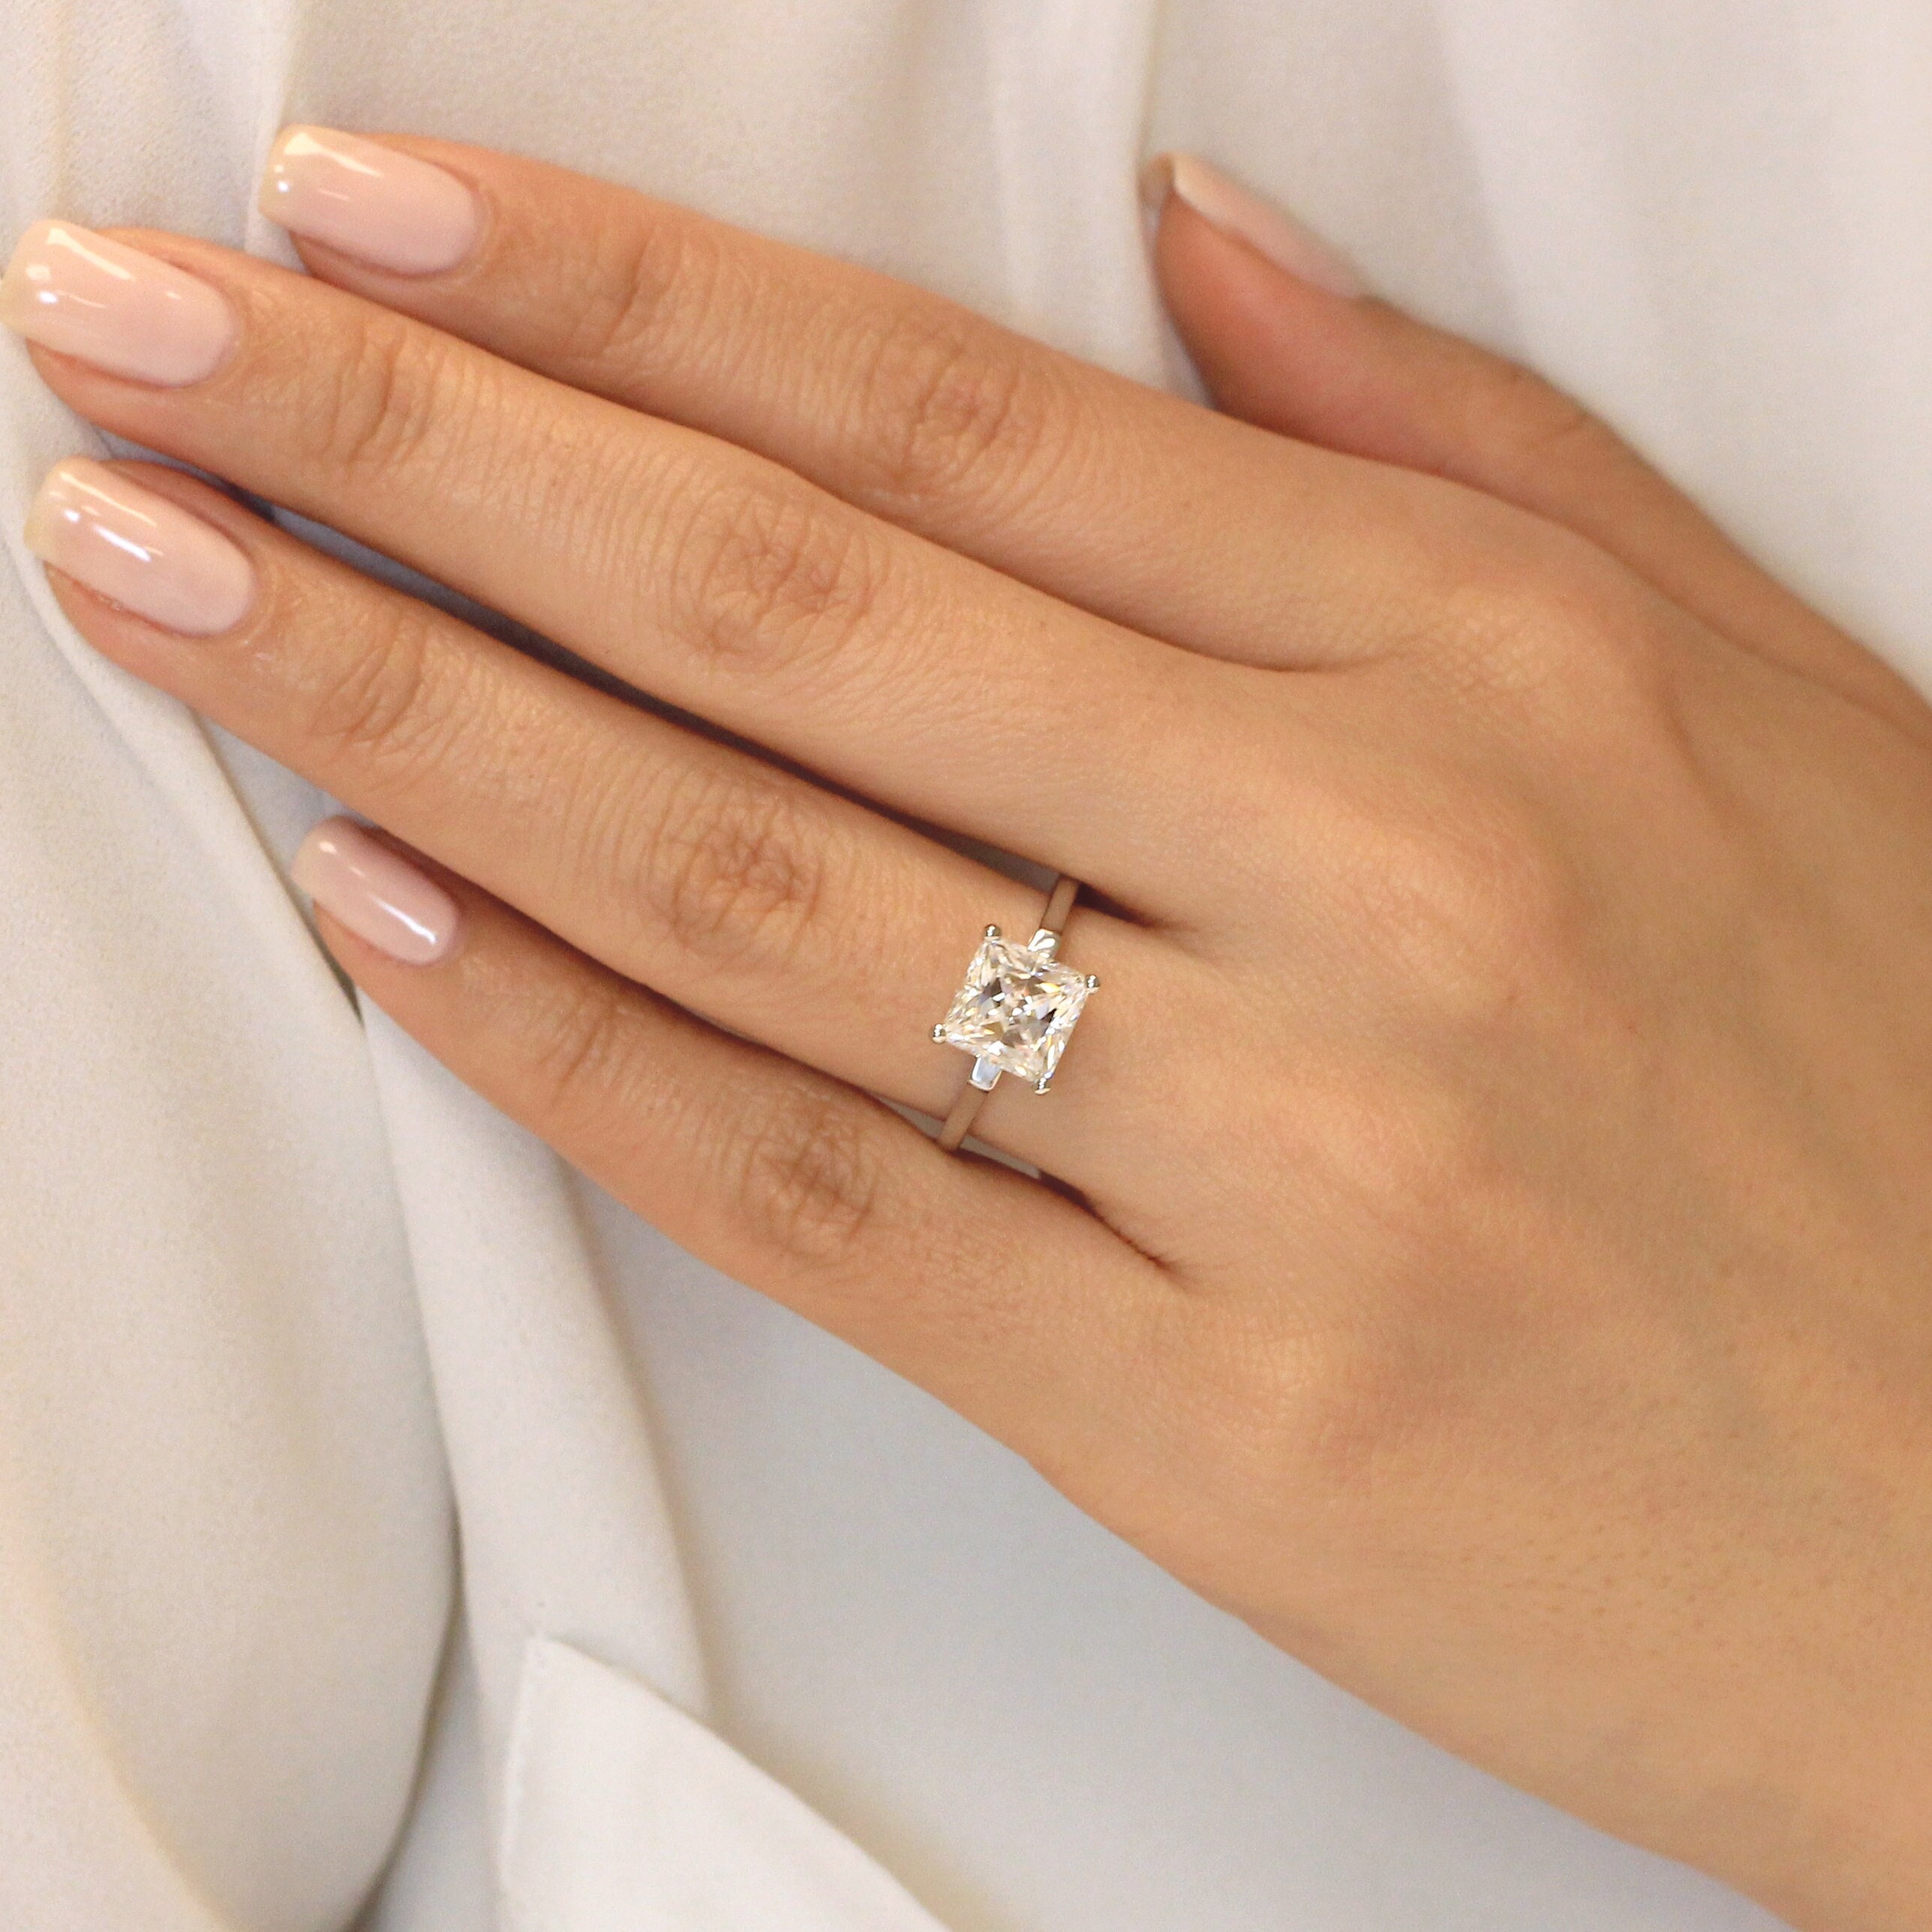 Ash / Asscher Cut Diamond Ring - Engagement Rings - Fitzgerald Jewelry